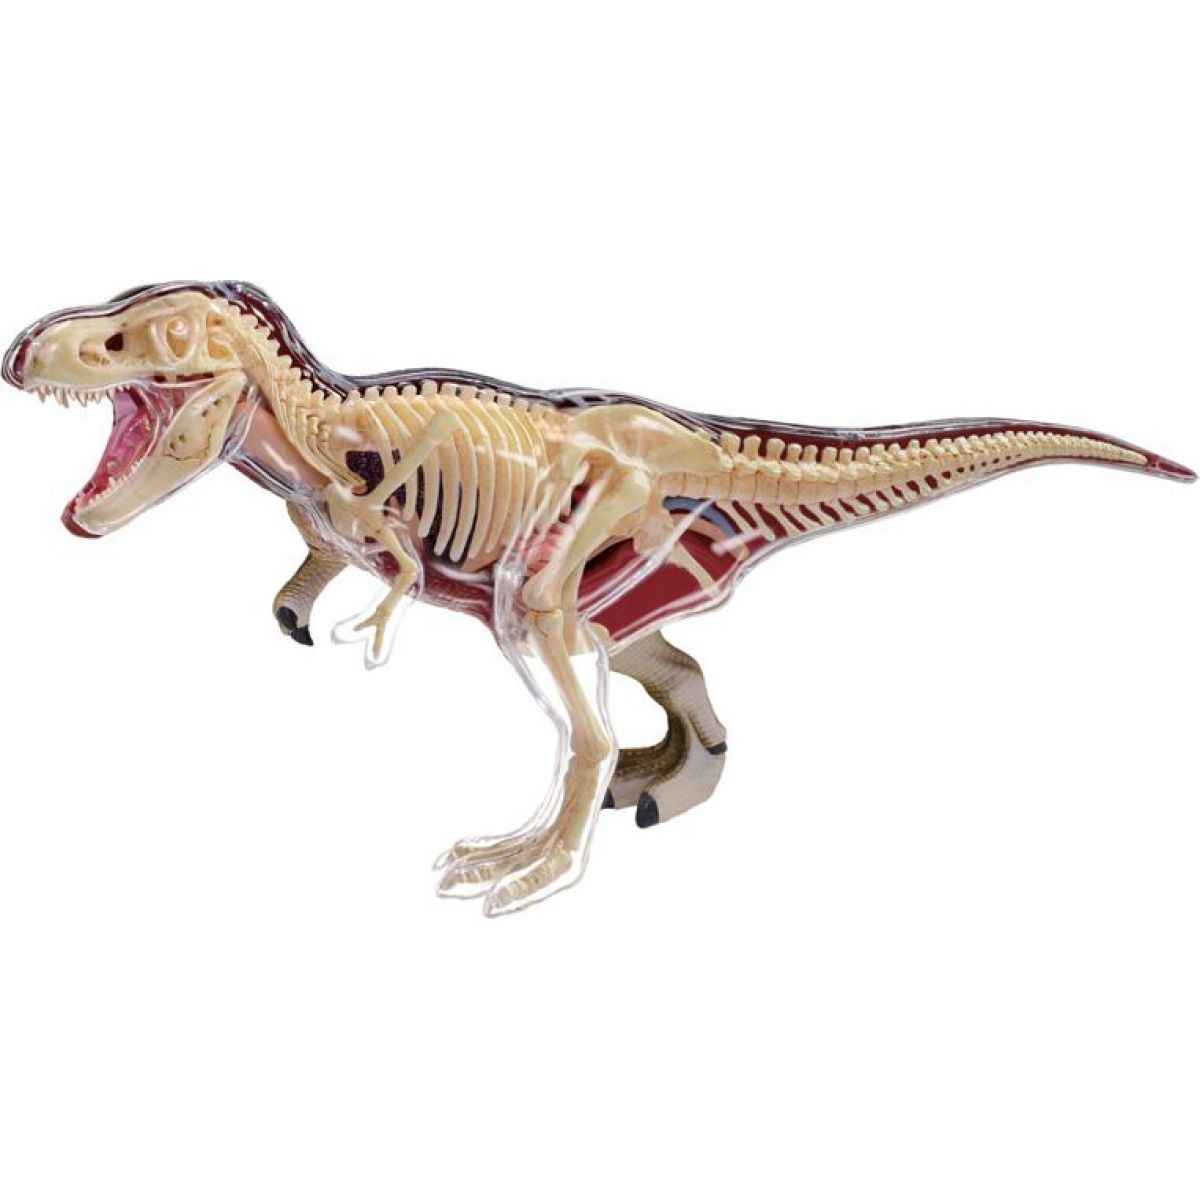 4D Anatomický model - T-Rex